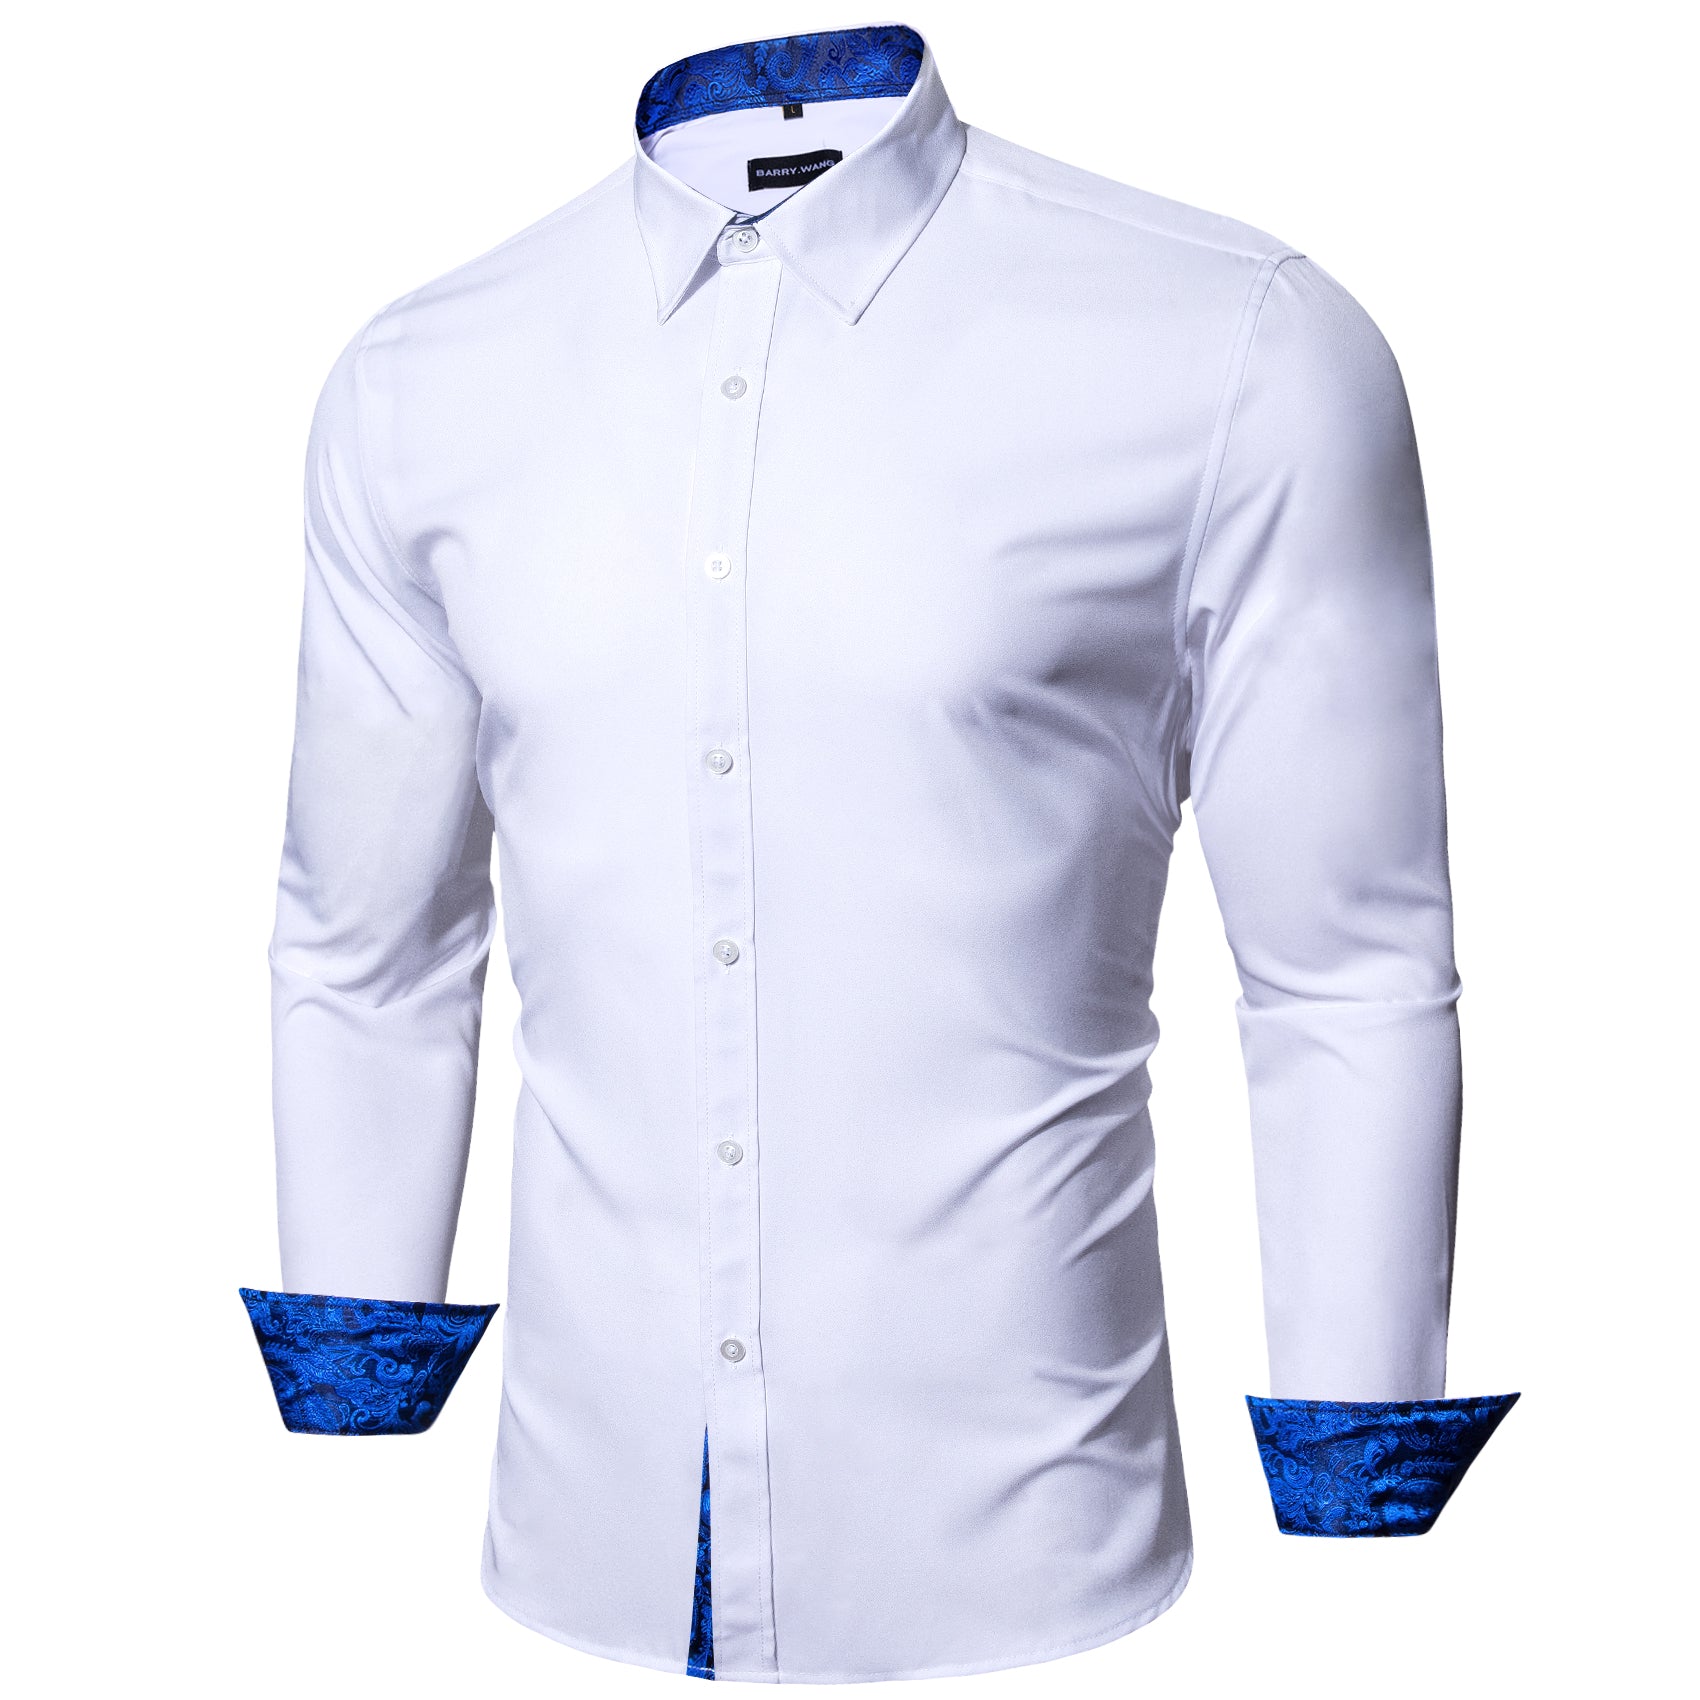 Barry.wang Fromal White Blue Splicing Men's Shirt